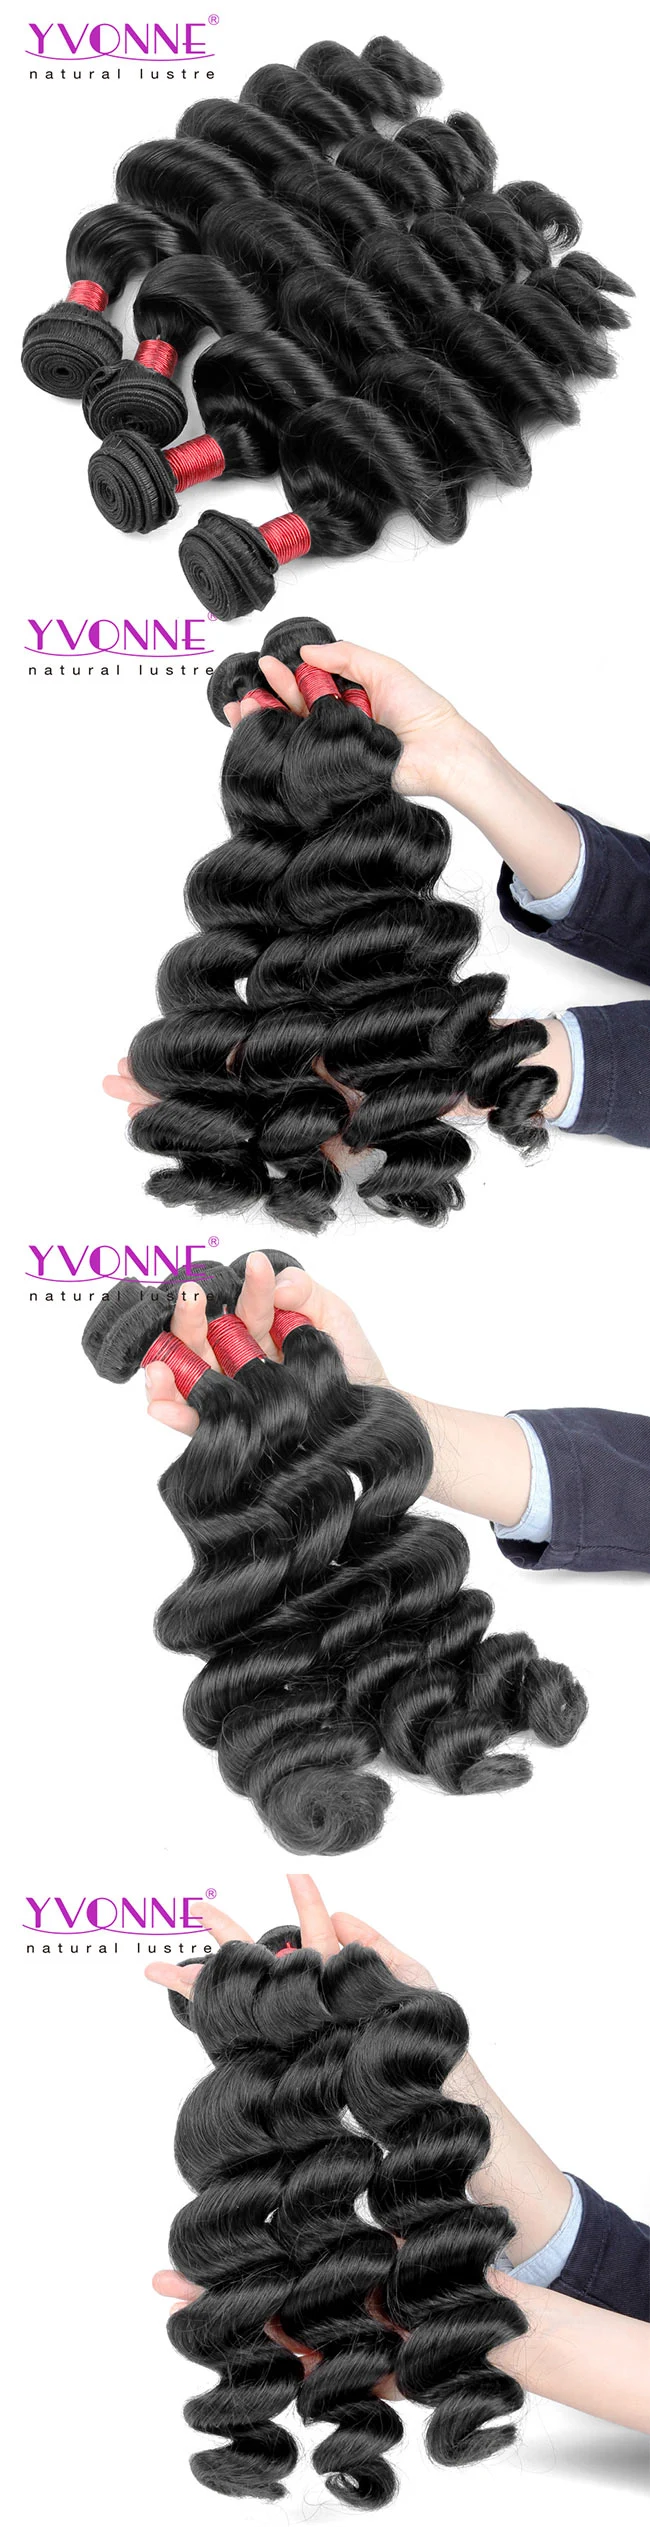 Yvonne Wholesale 8A Diamond Brazilian Loose Wave Virgin Human Hair Extension